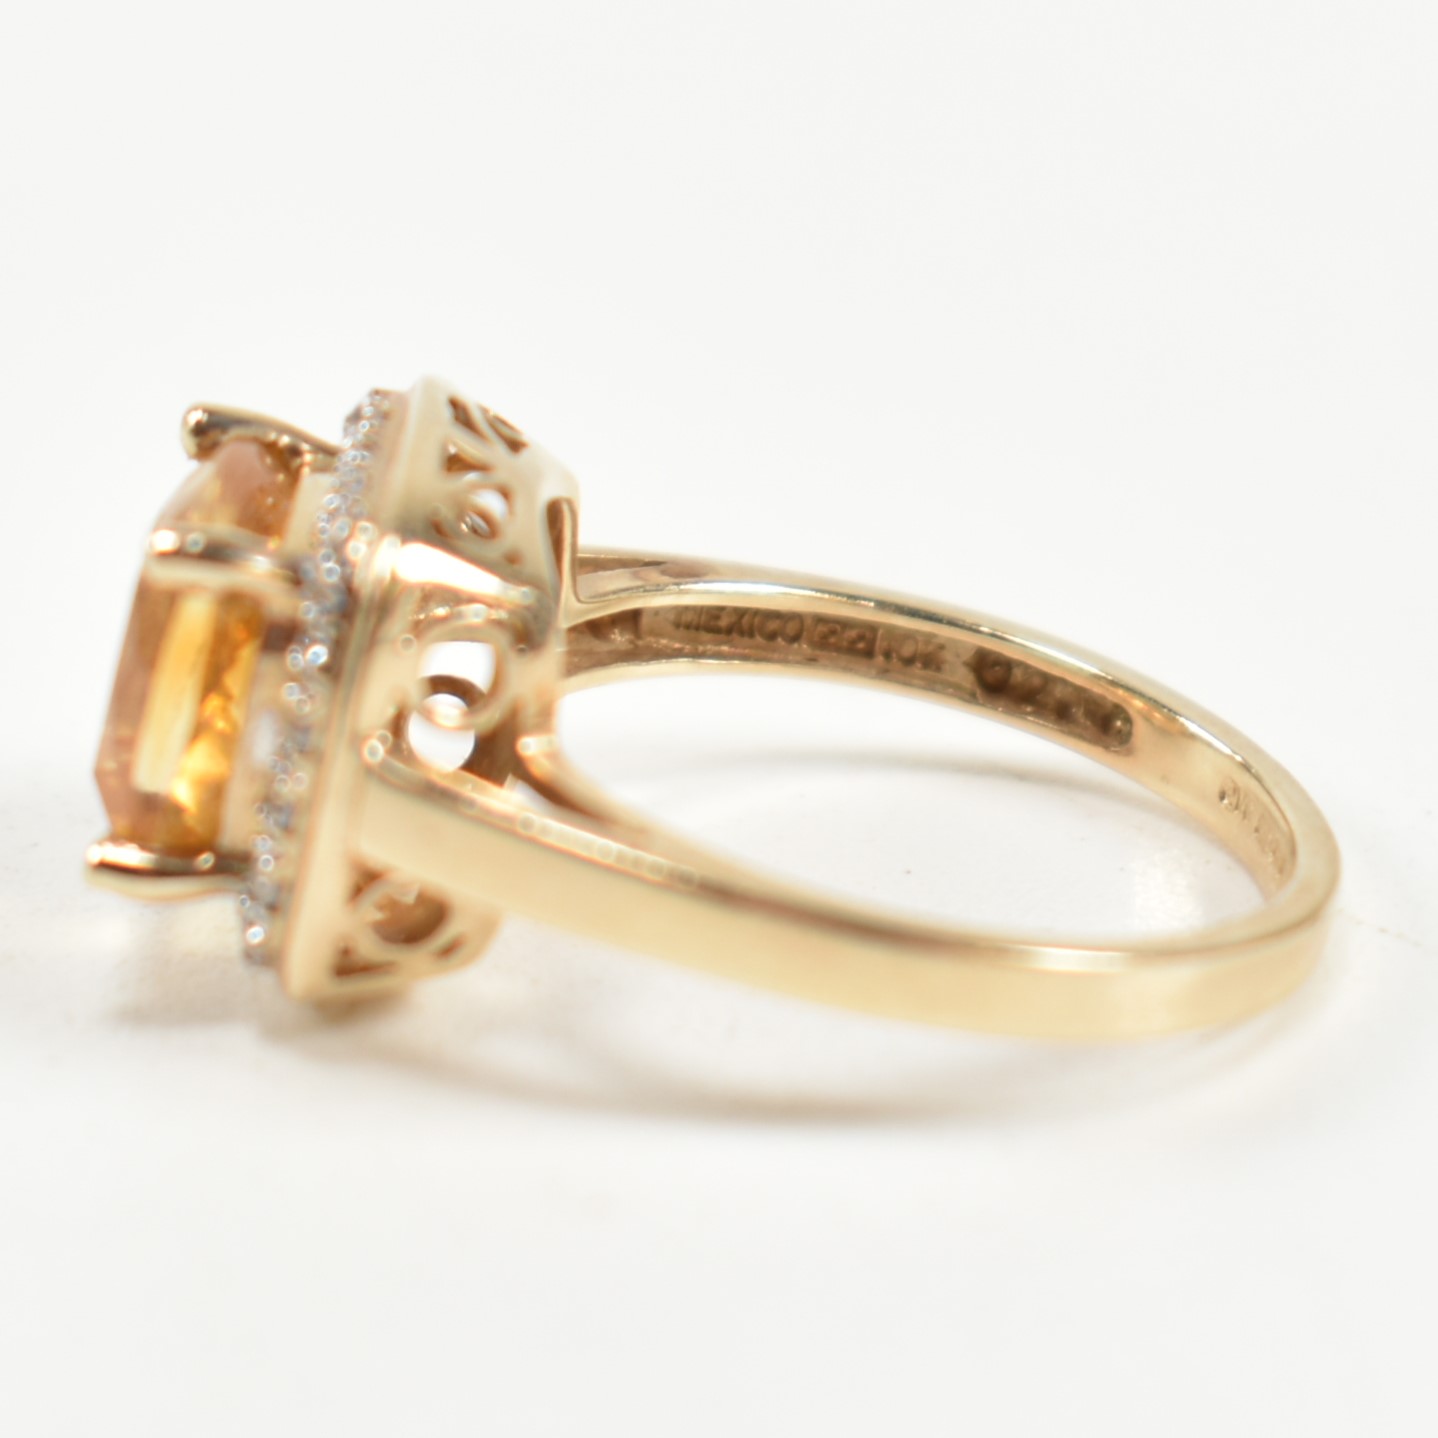 HALLMARKED 9CT GOLD CITRINE & DIAMOND RING - Image 6 of 9